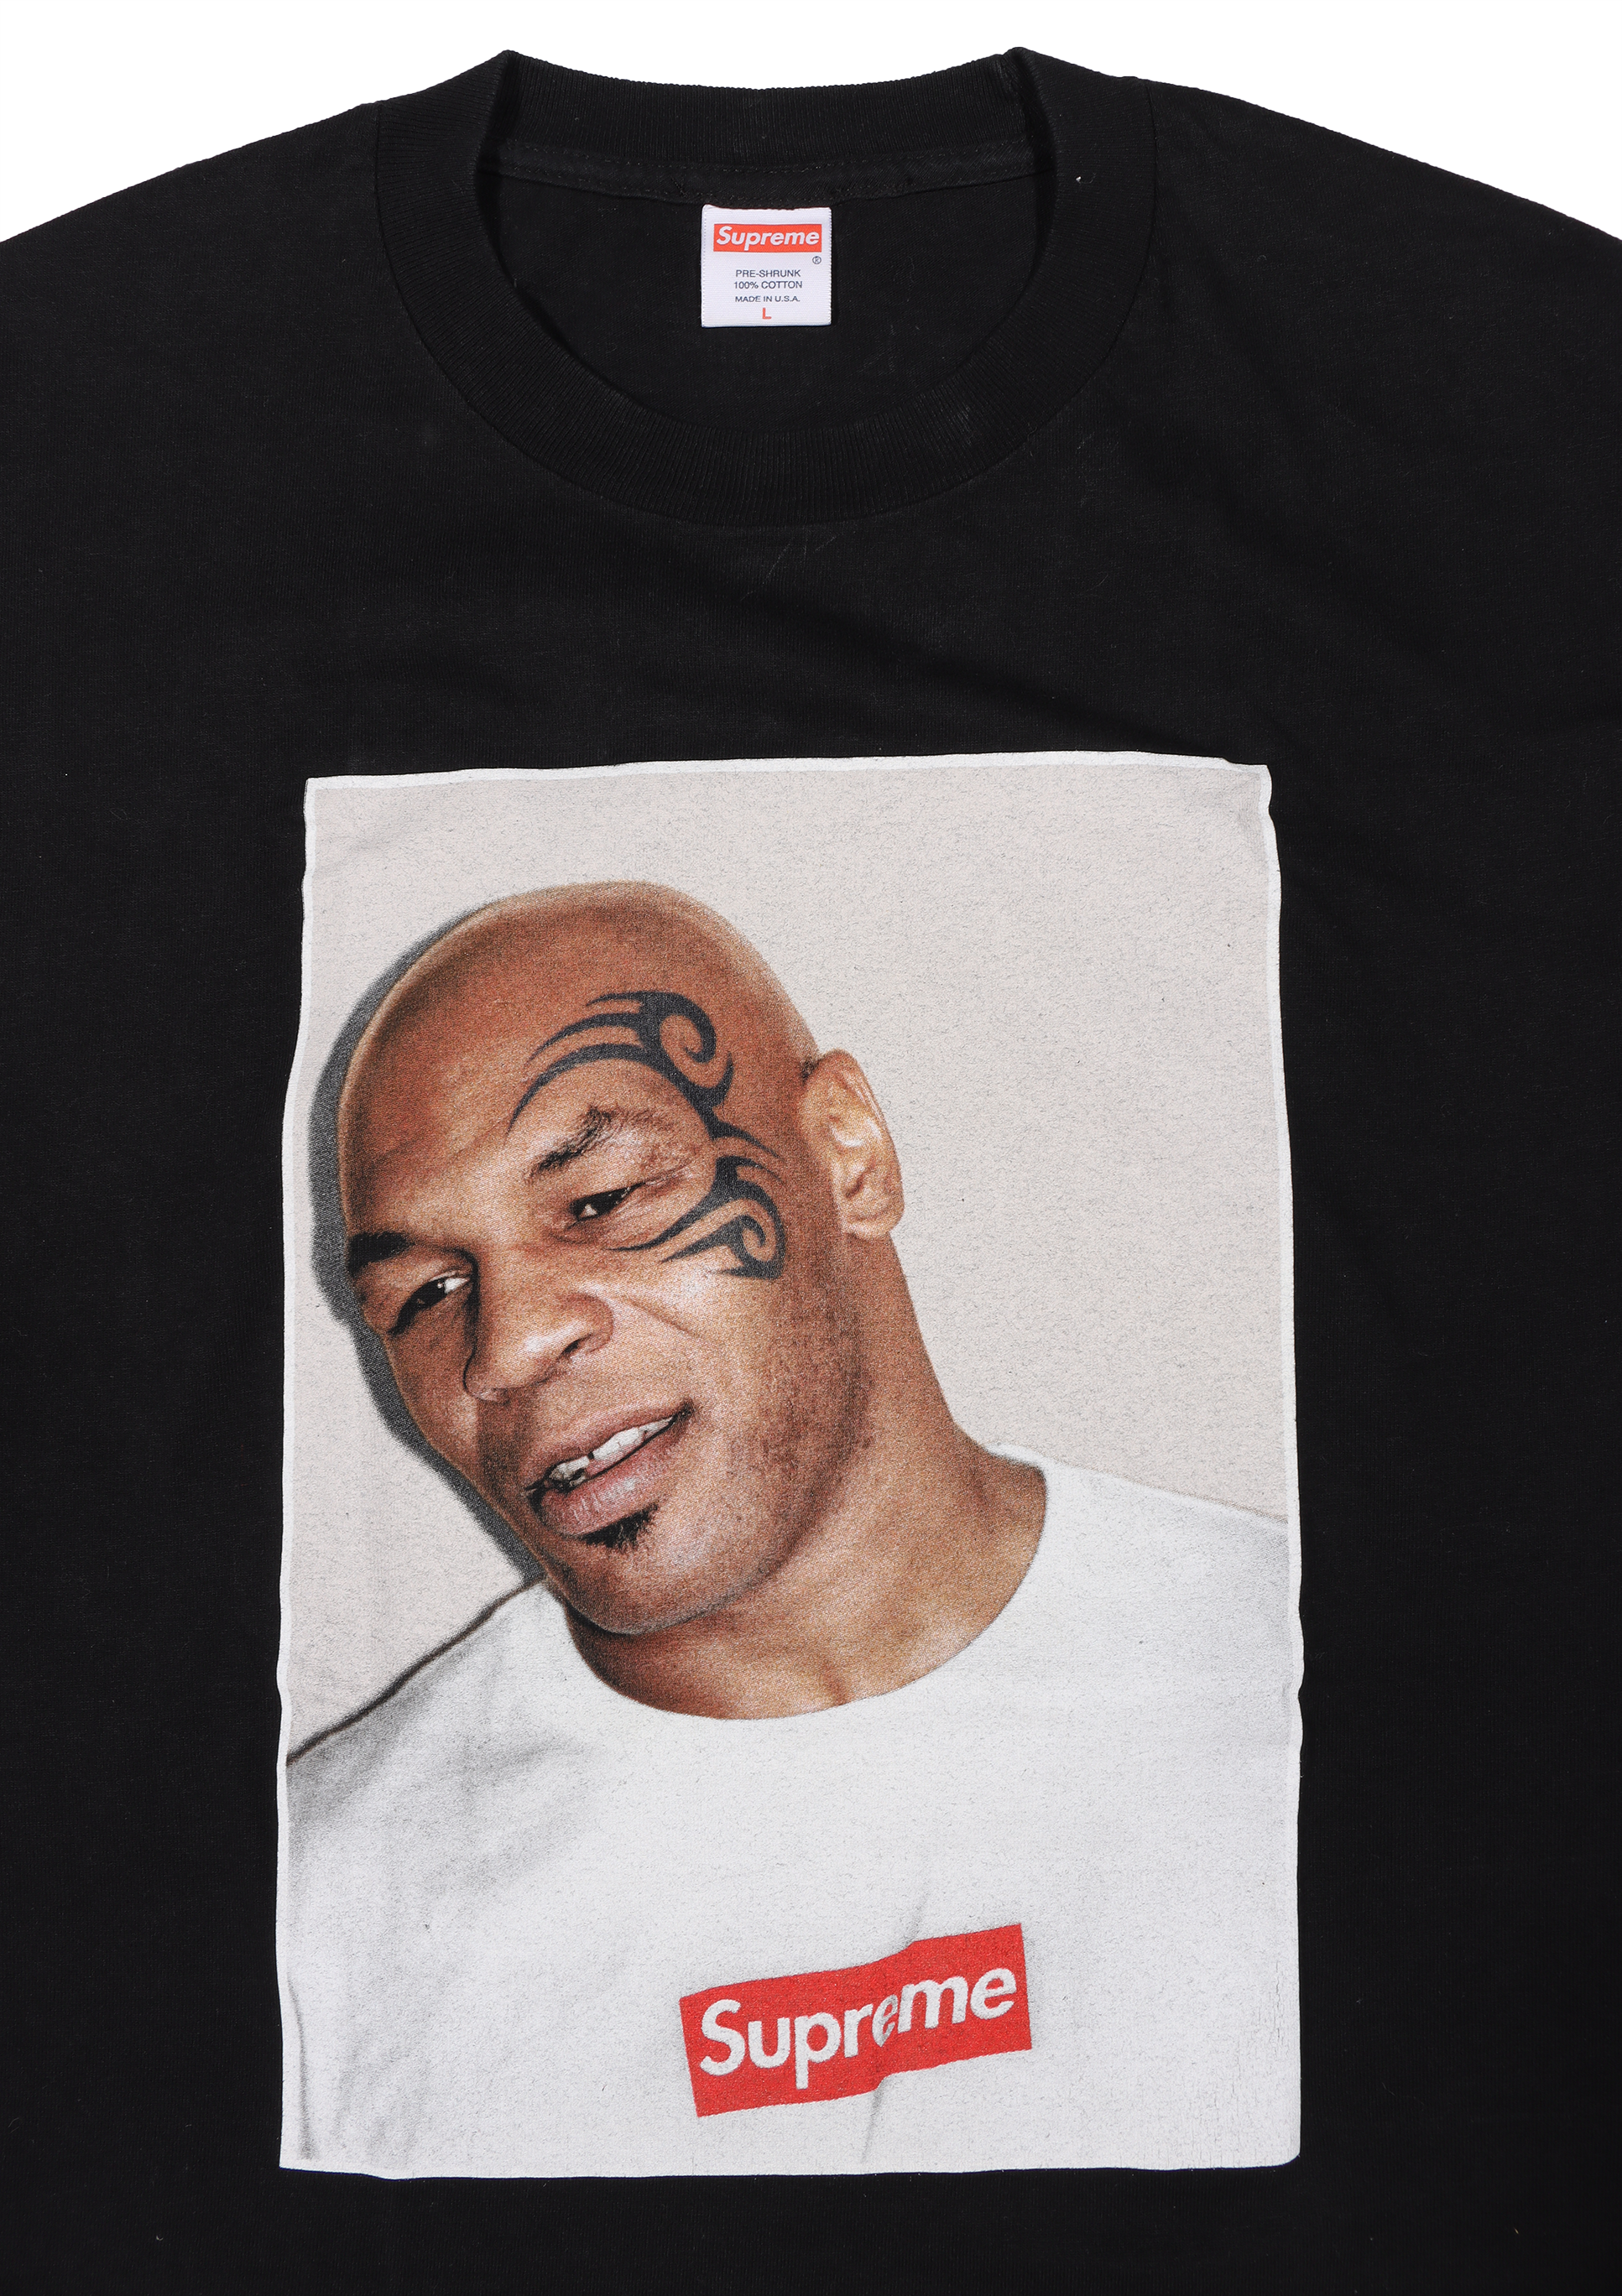 Mike Tyson Photo T-Shirt SS07 - Black